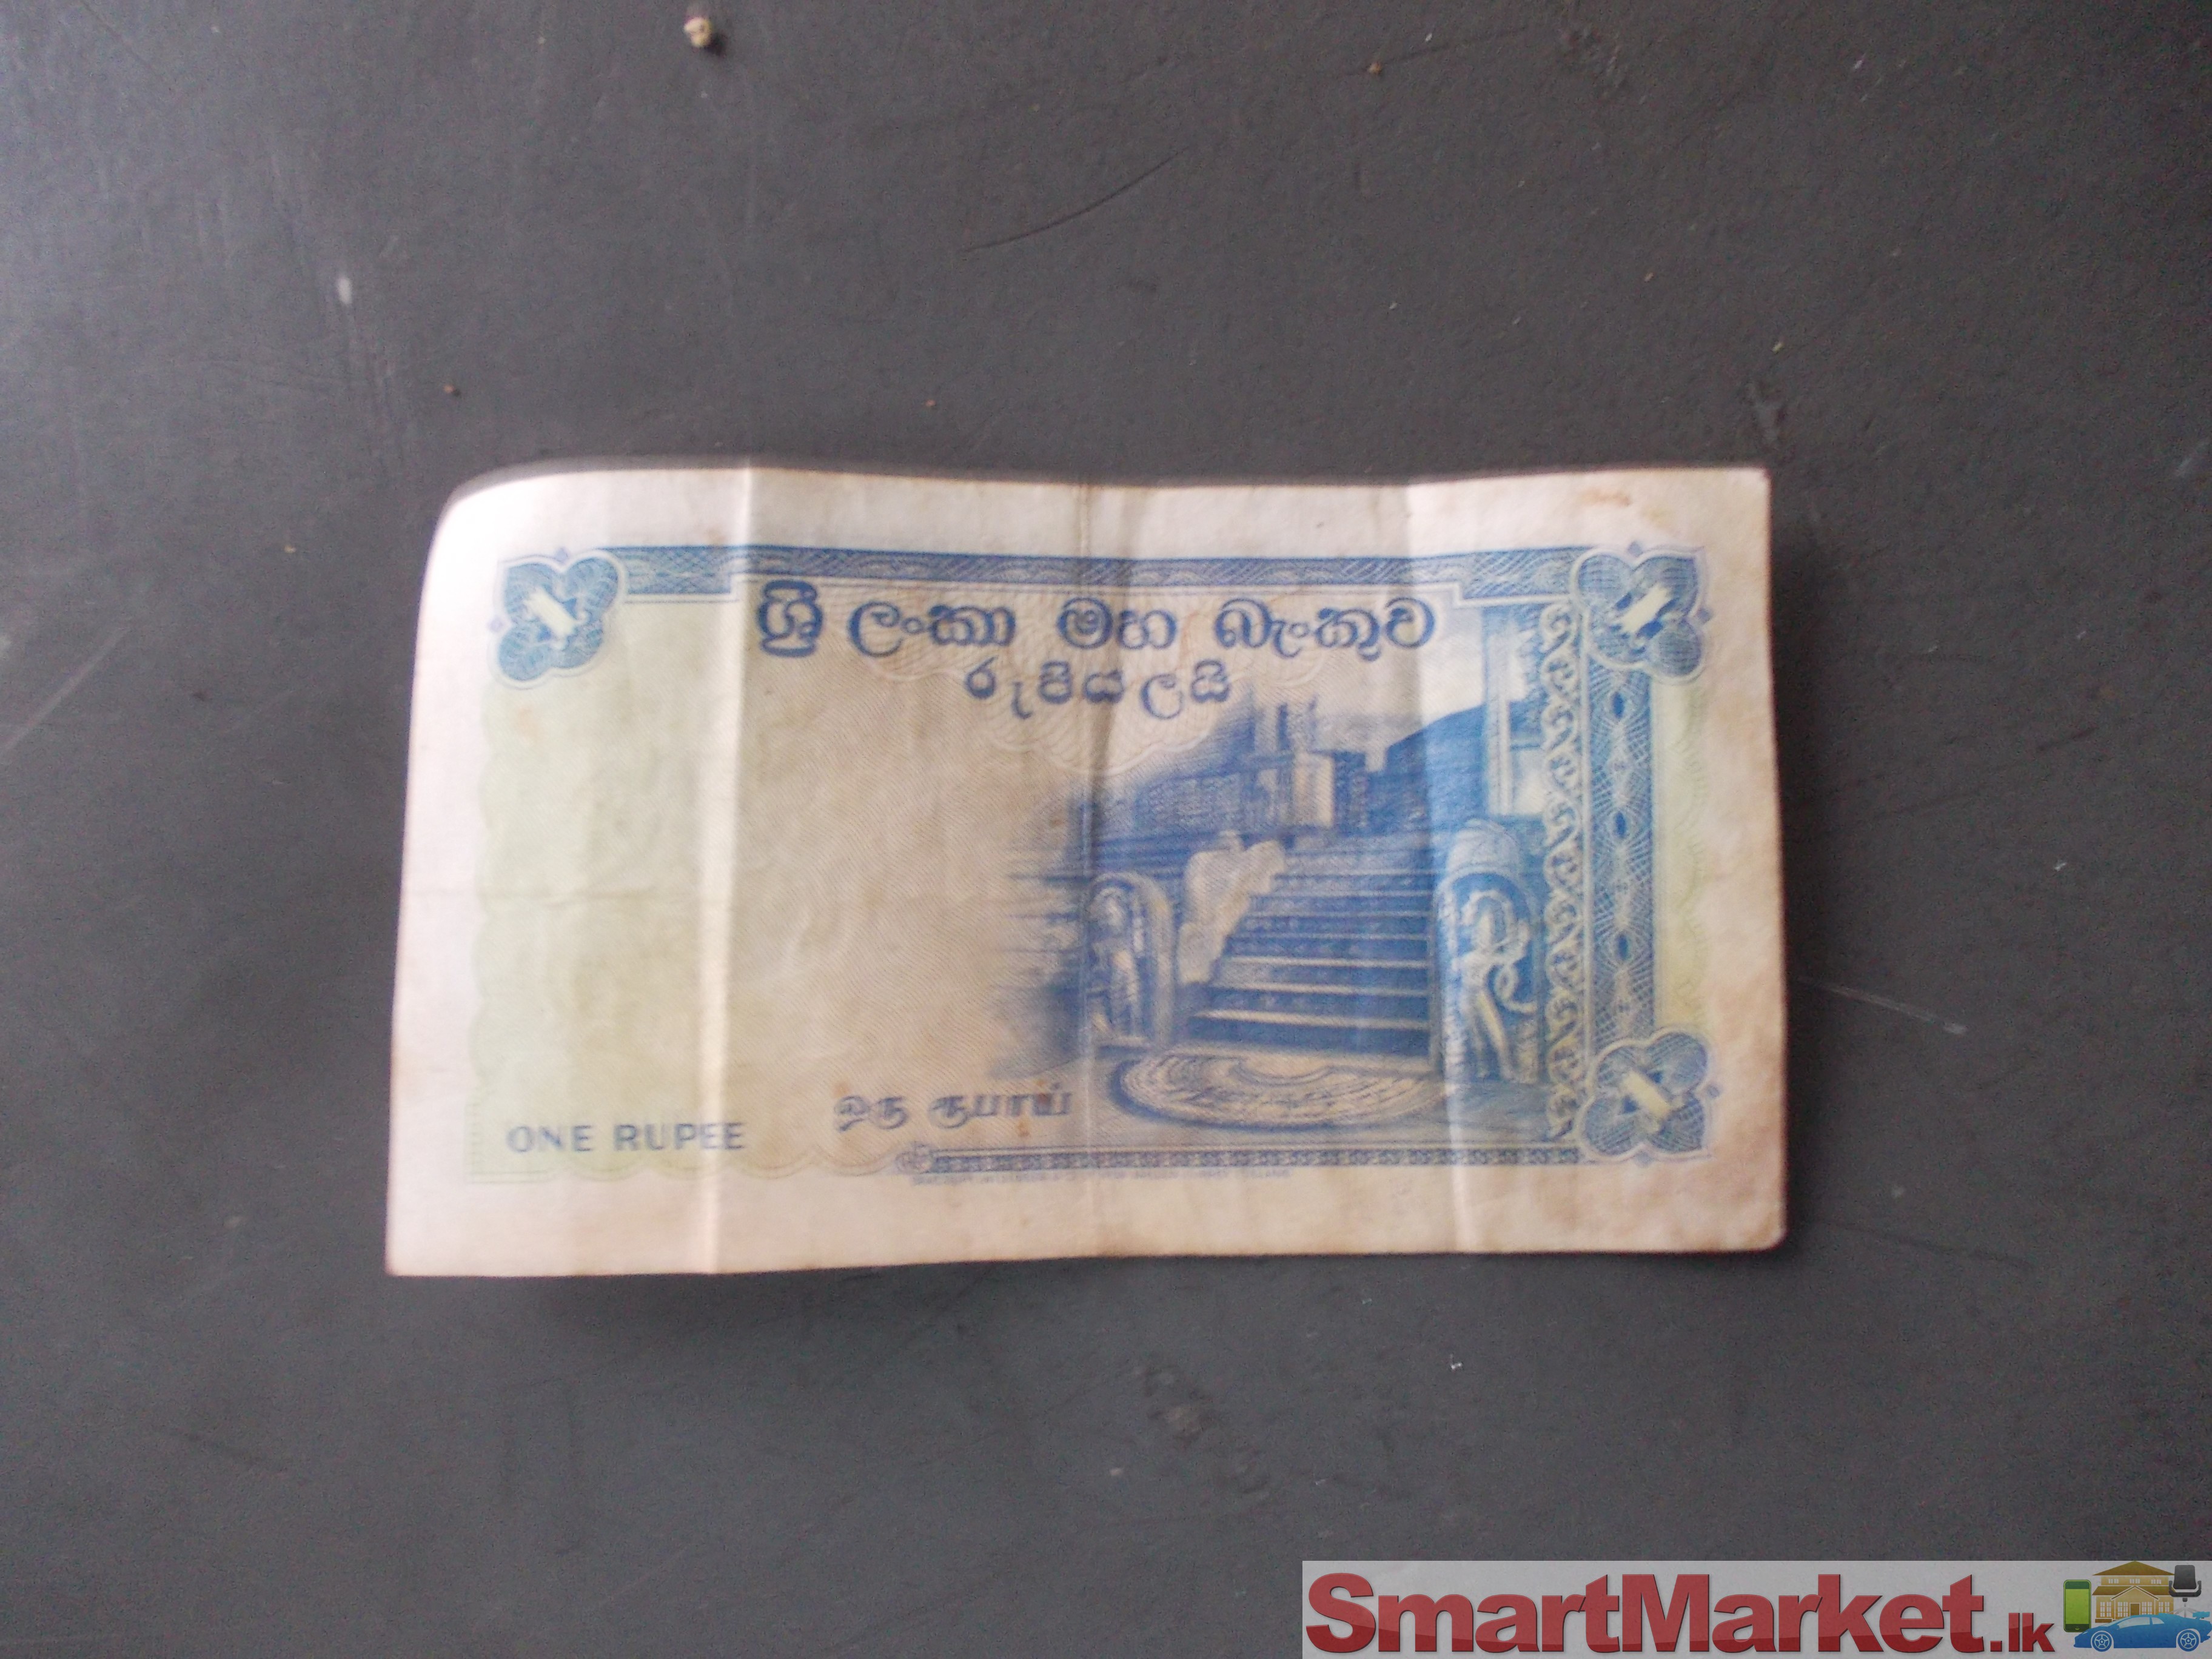 Antique one rupee nots